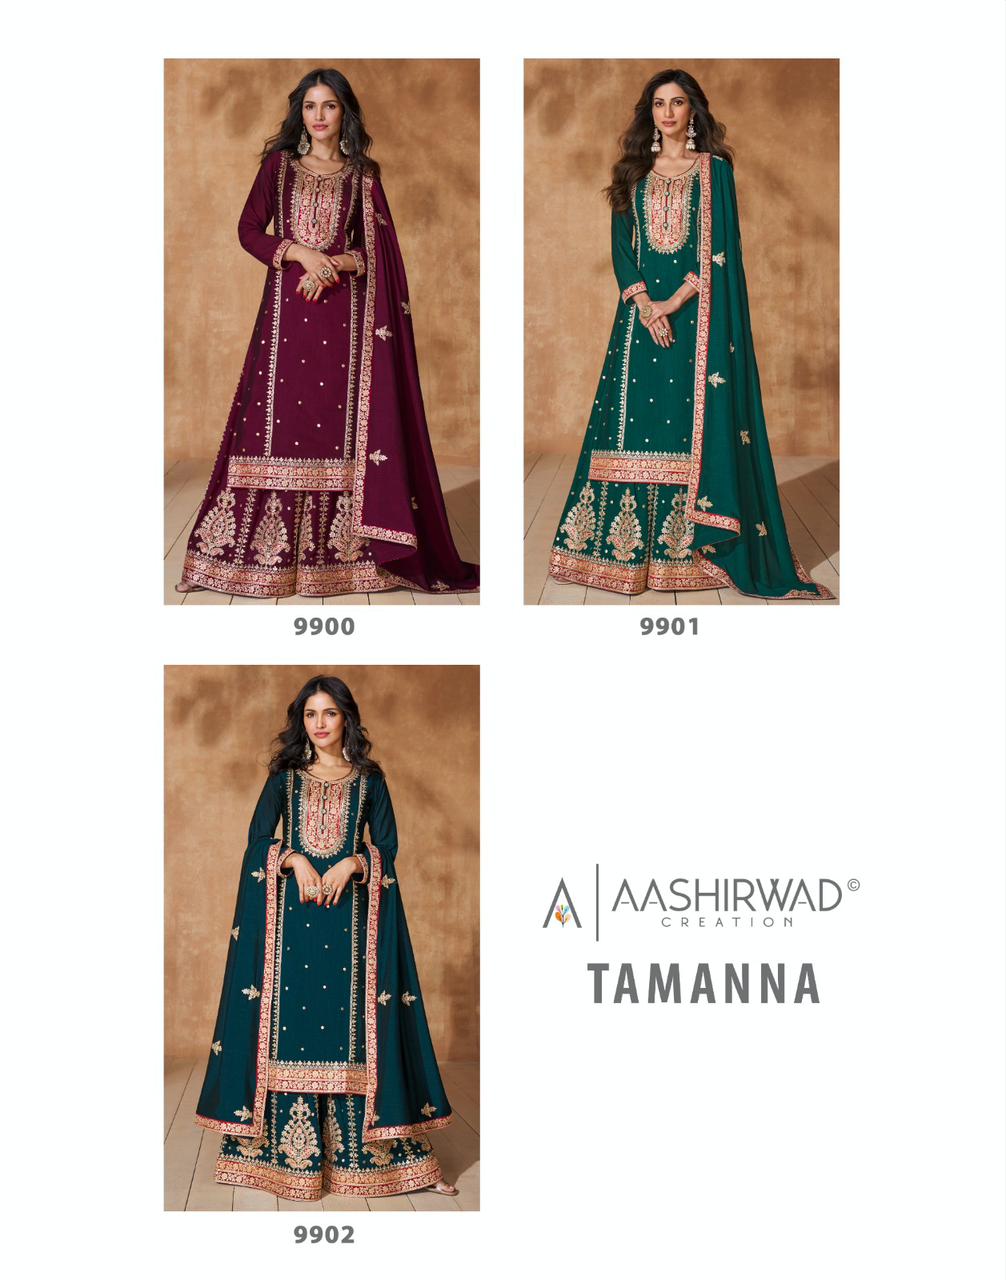 Aashirwad Tamanna collection 2